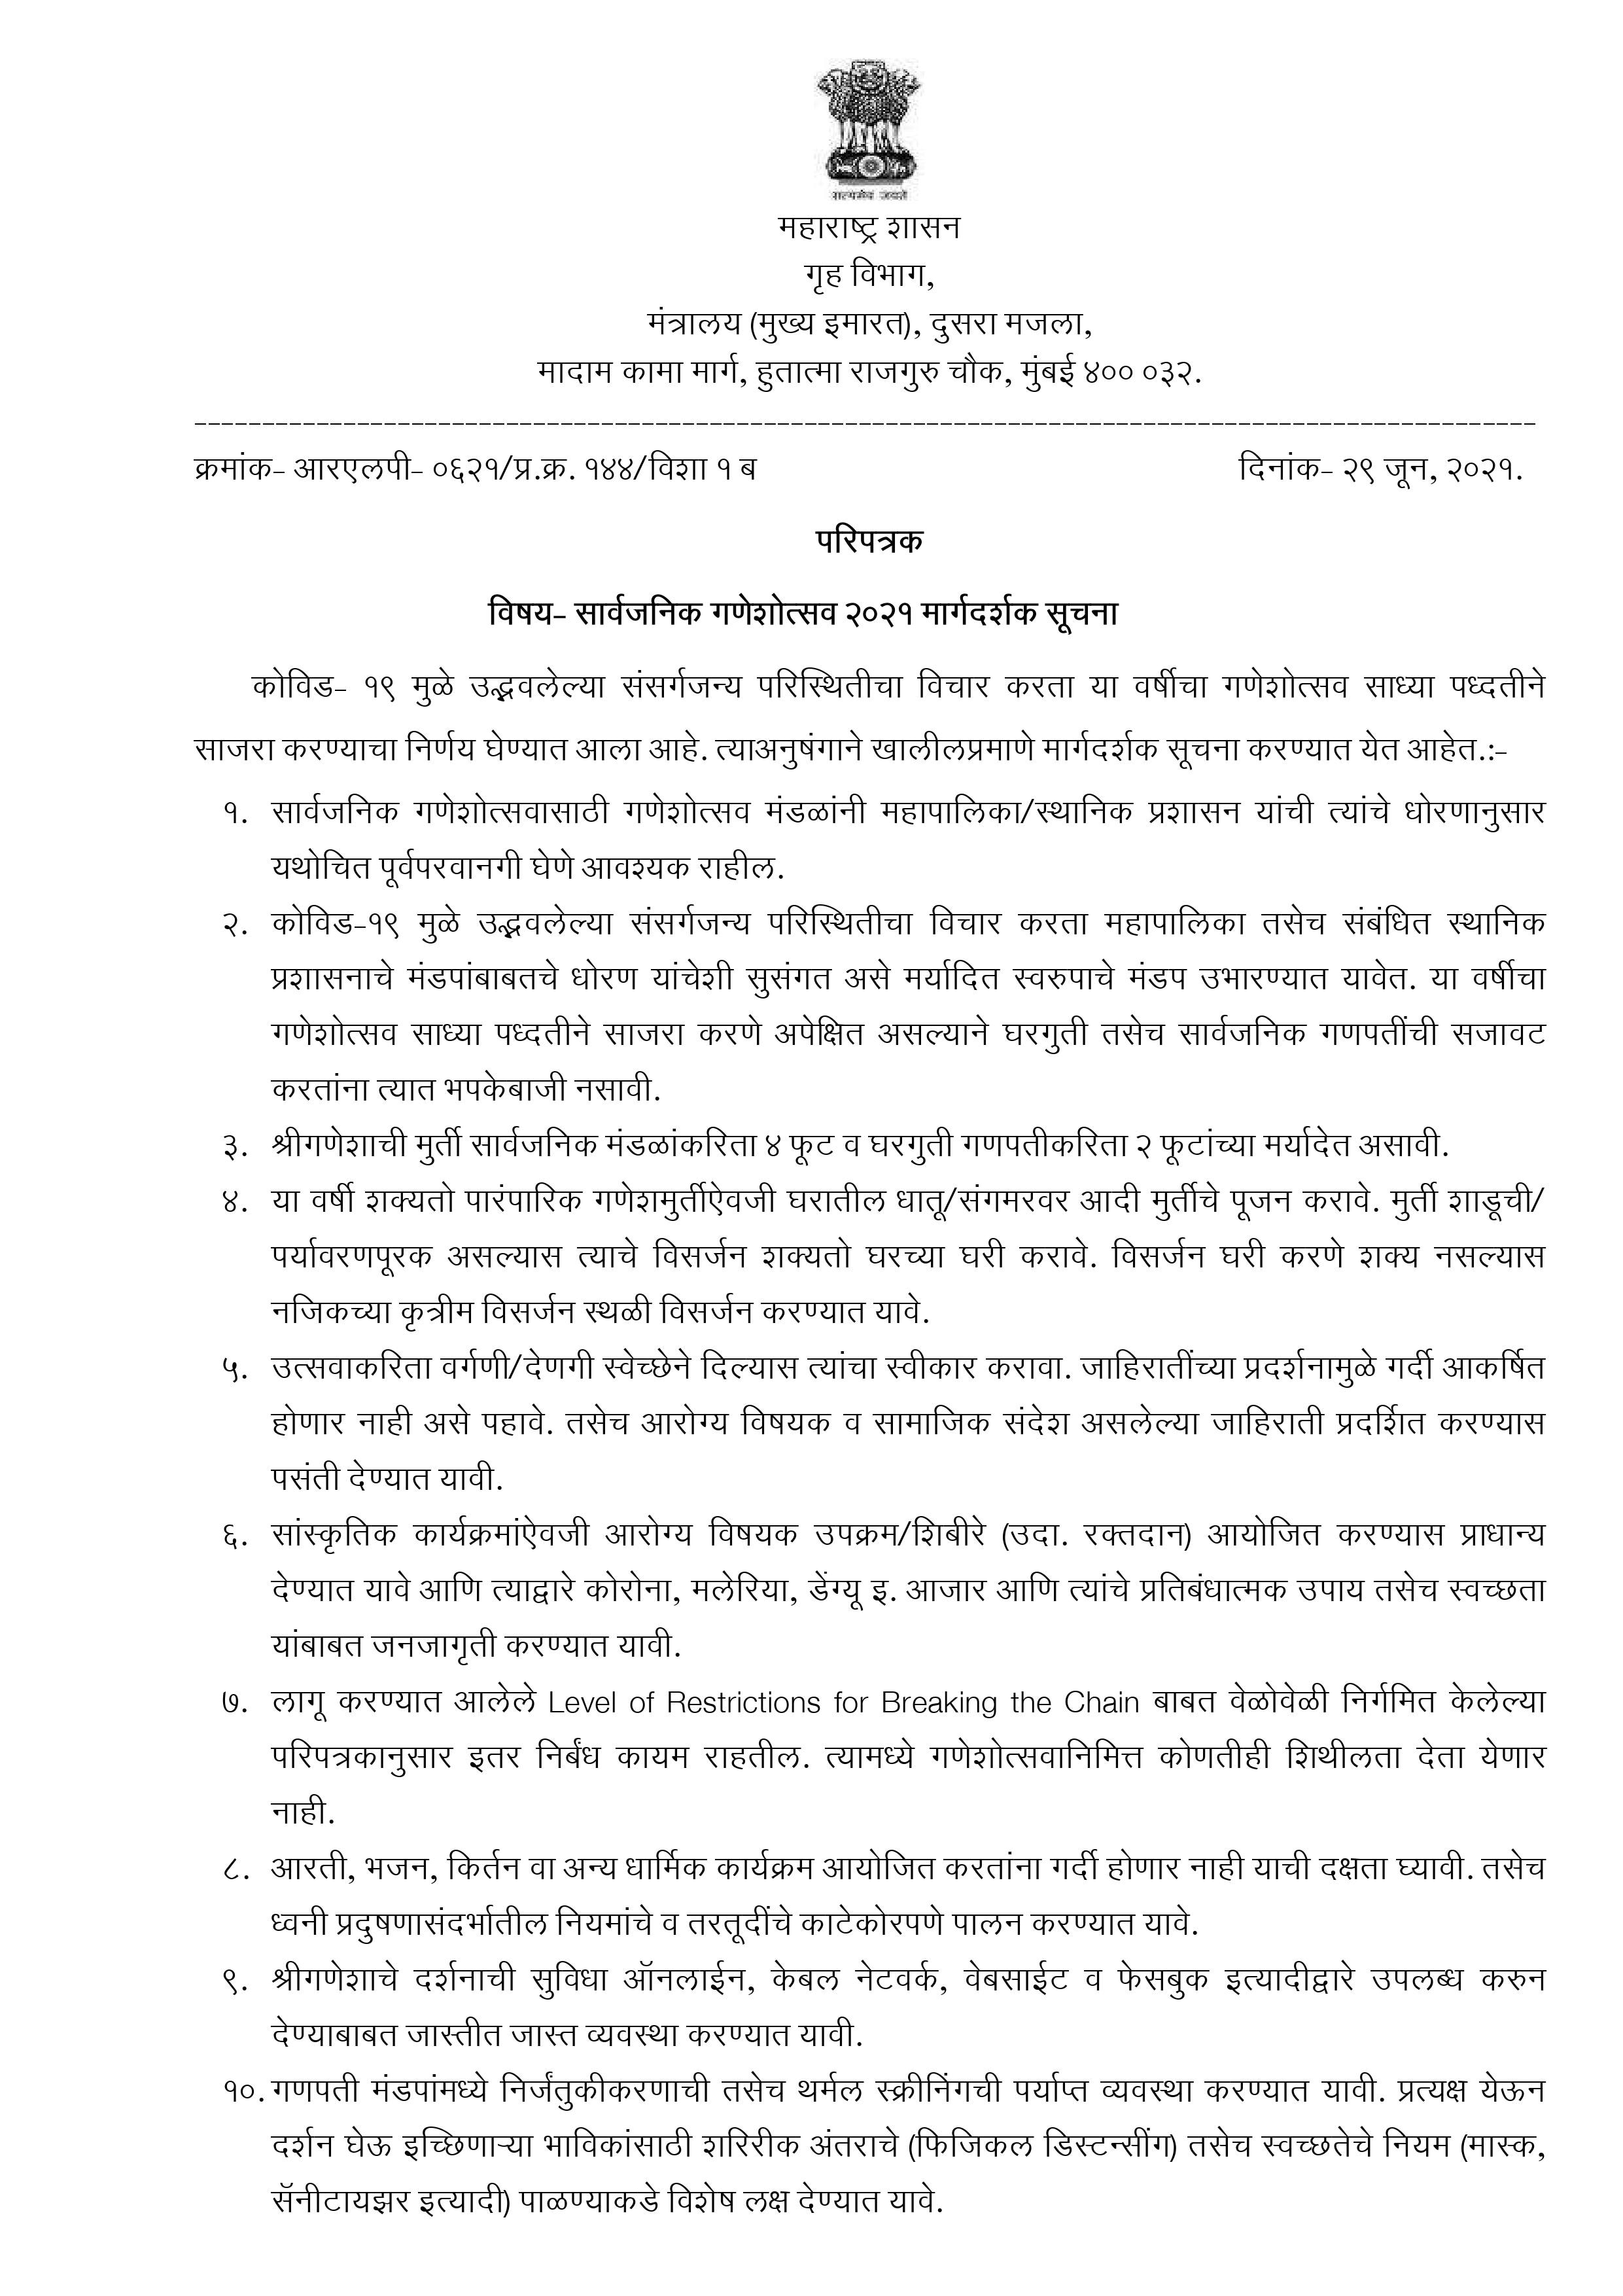 Ganesh Utsav Guidelines: No Giant Idols Or Mega Celebrations, Says Maharashtra CM Uddhav Thackeray